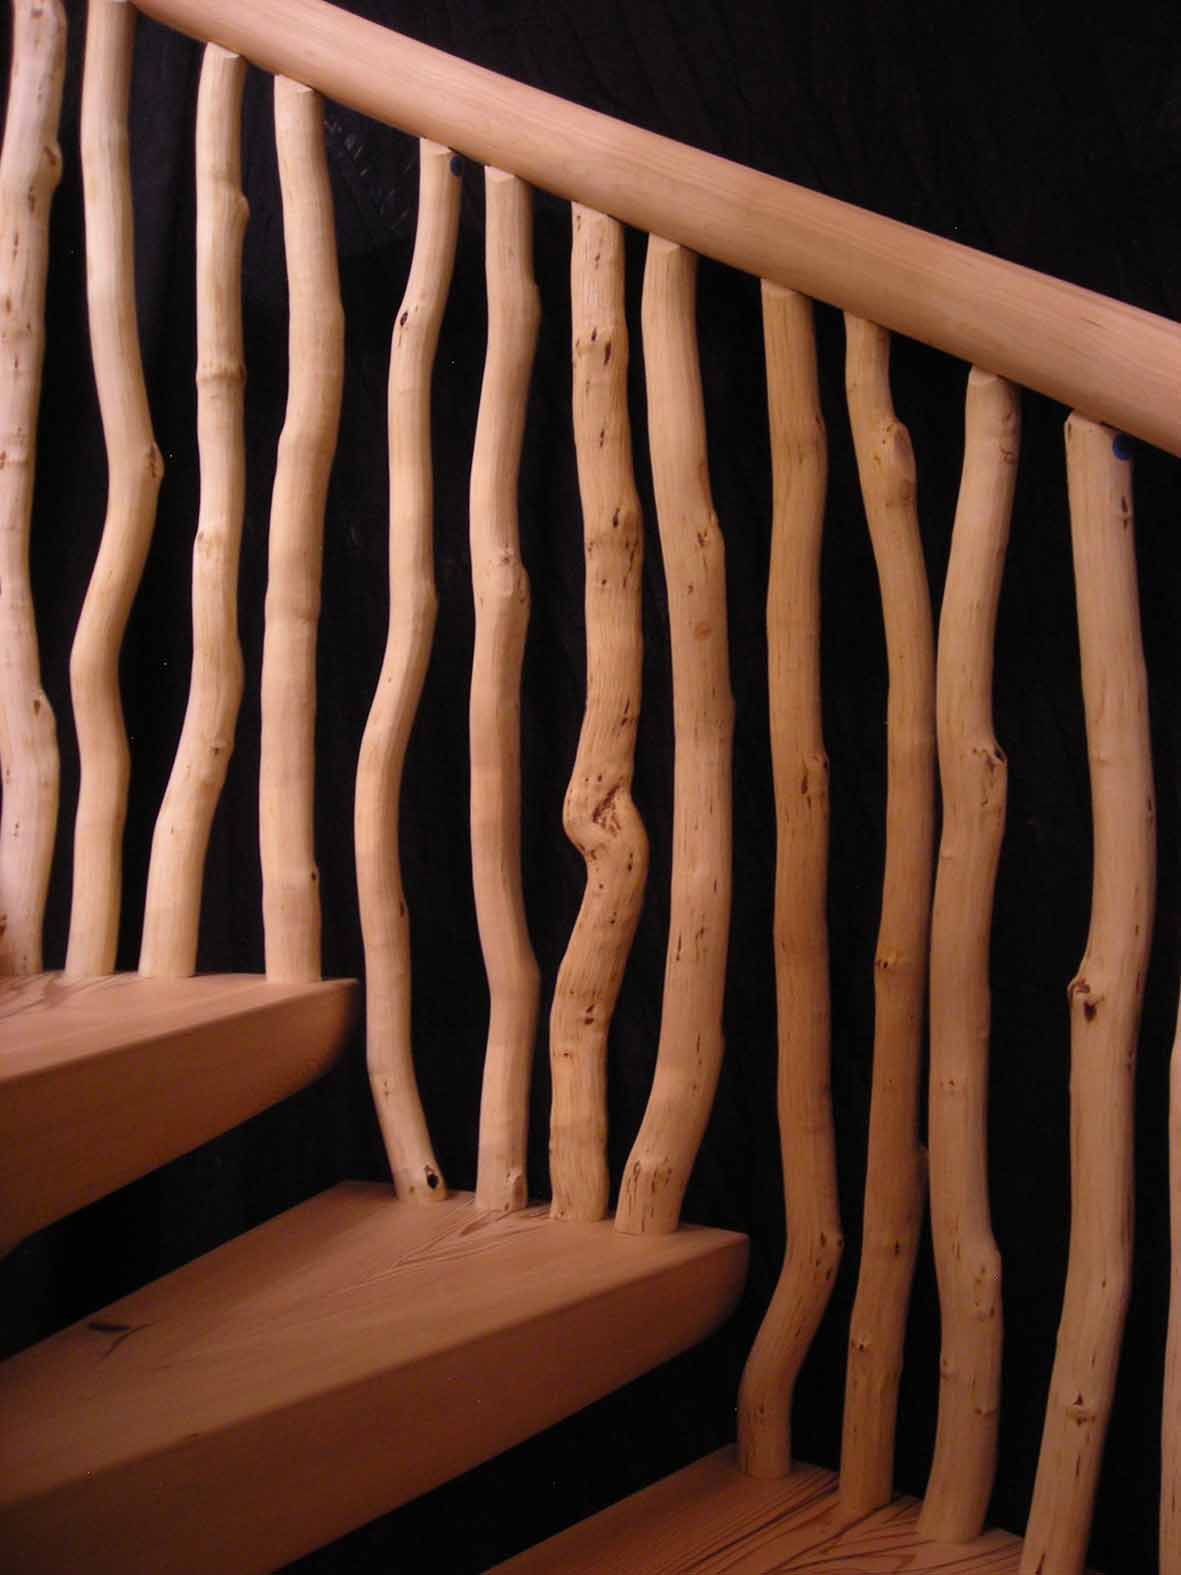 Custom Log Spiral Stairs